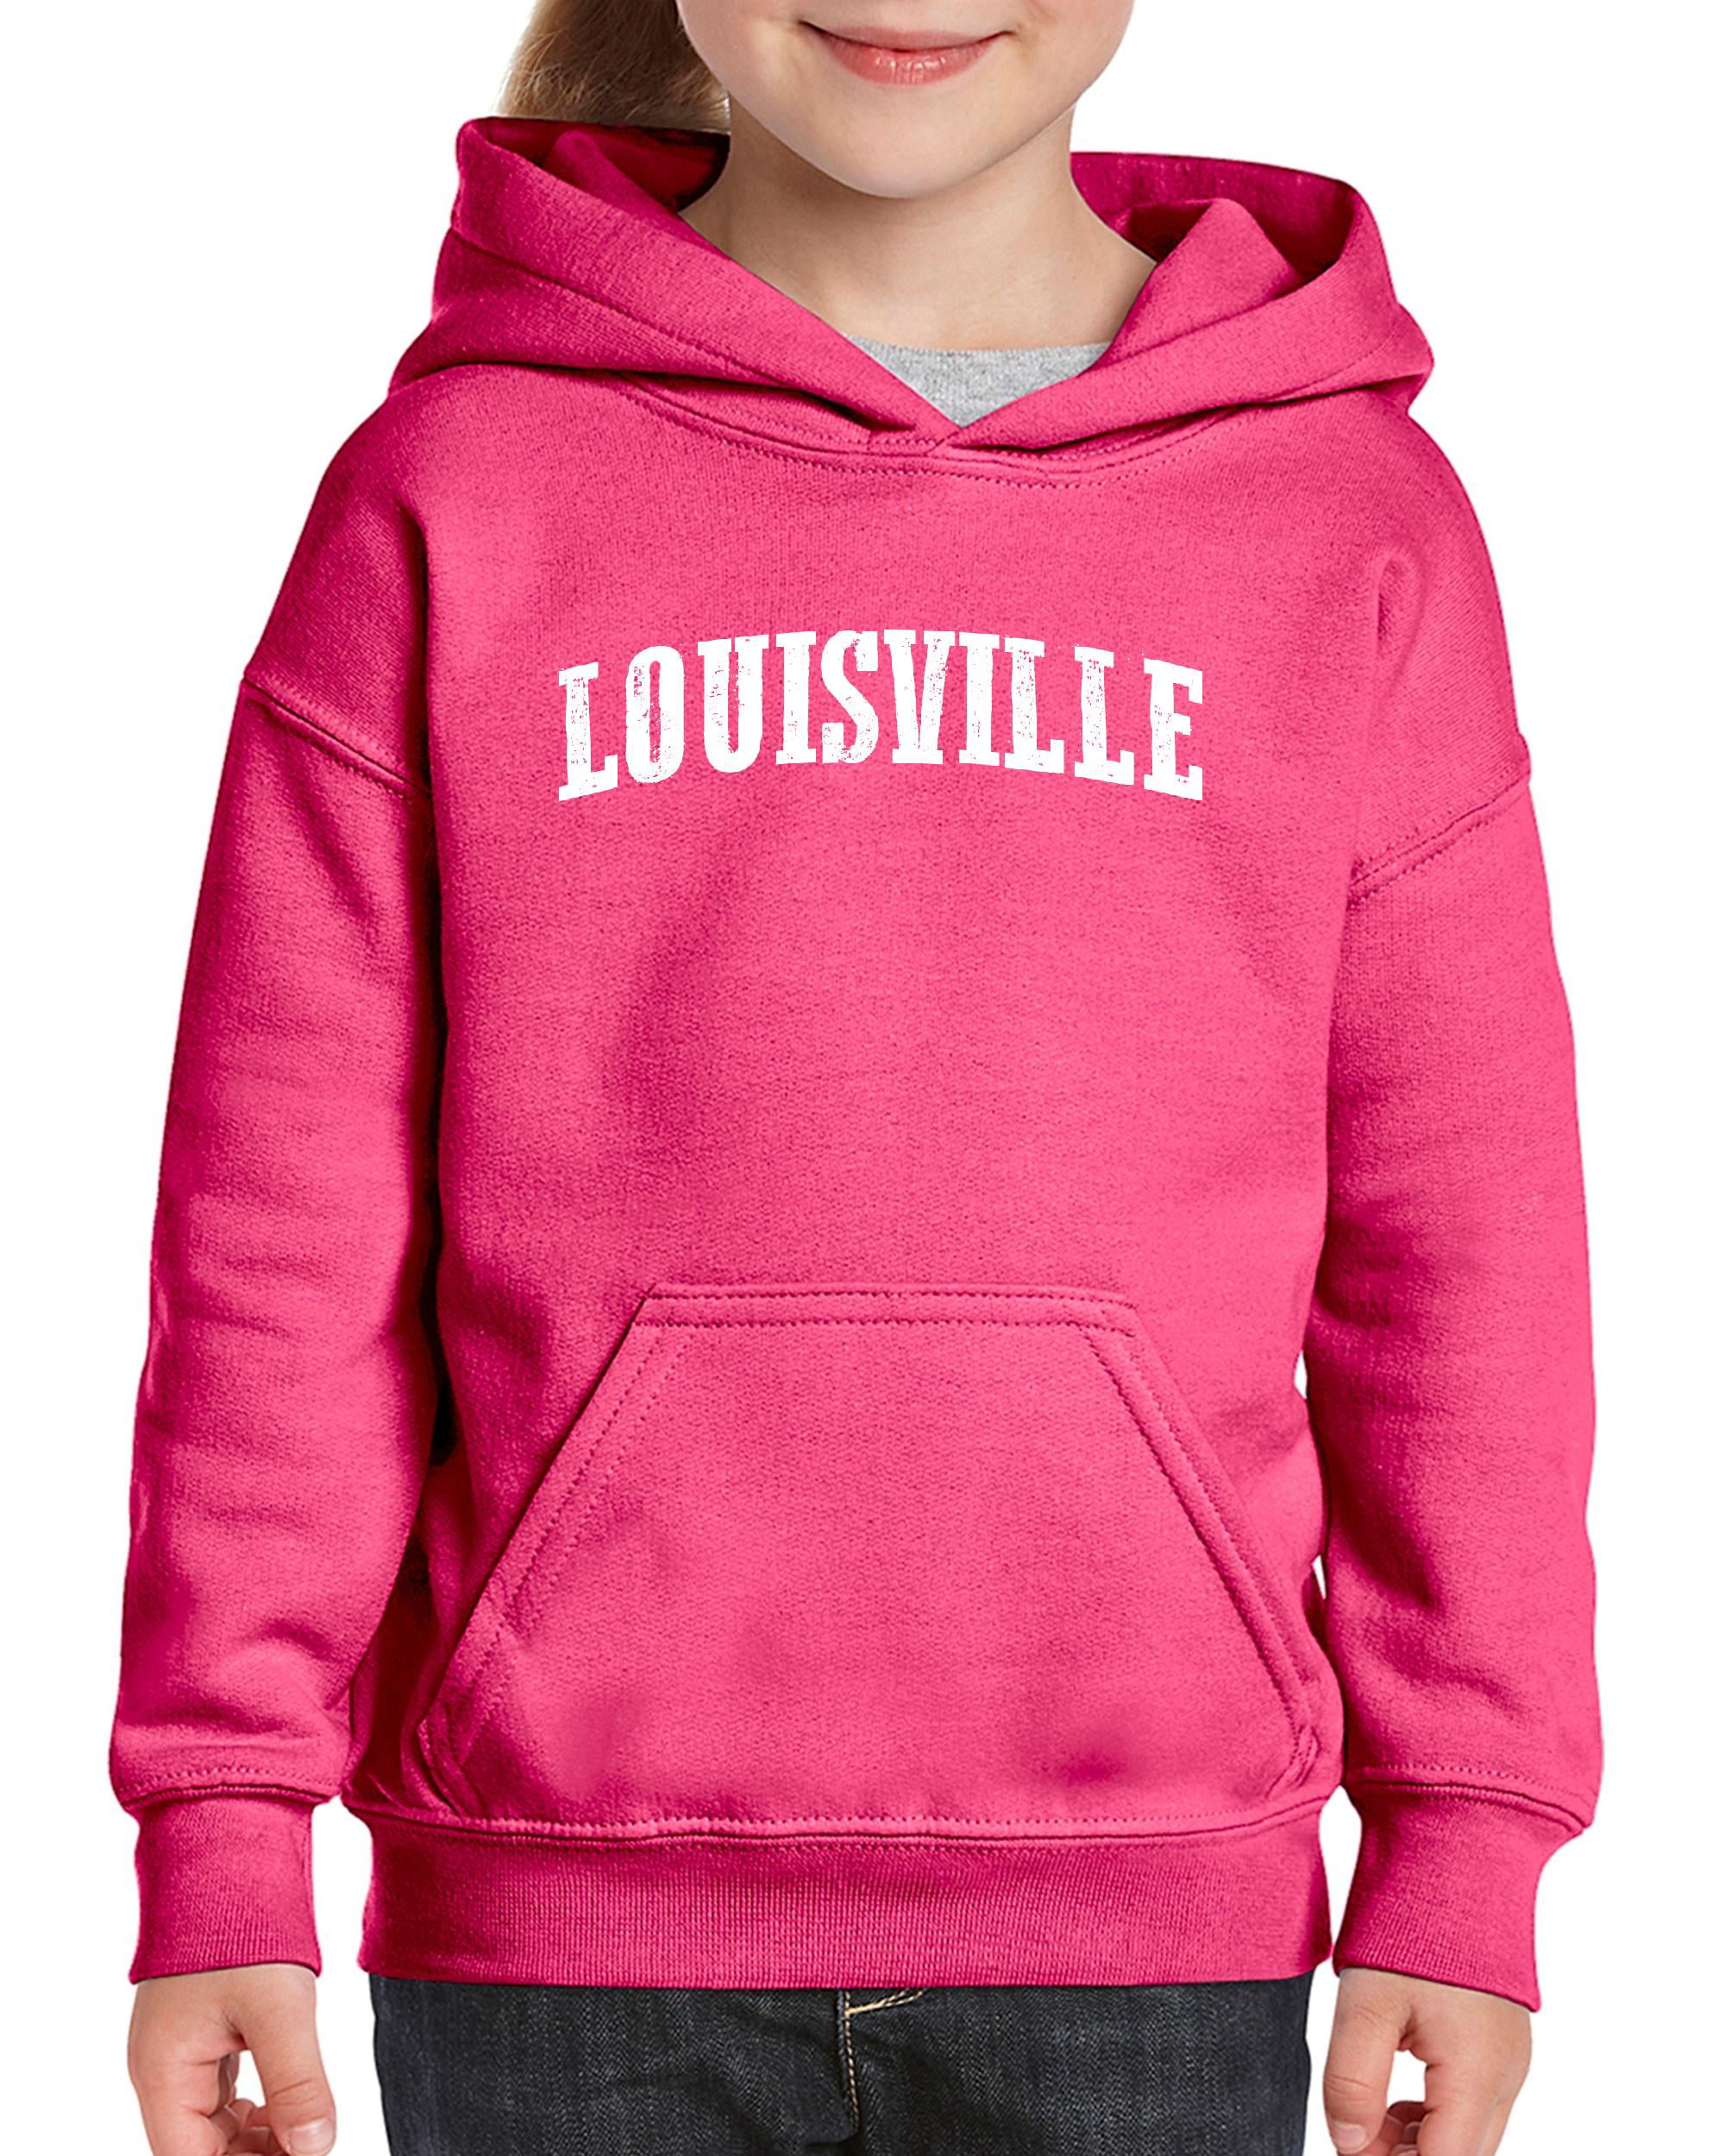 IWPF - Women Sweatshirts and Hoodies - Louisville 